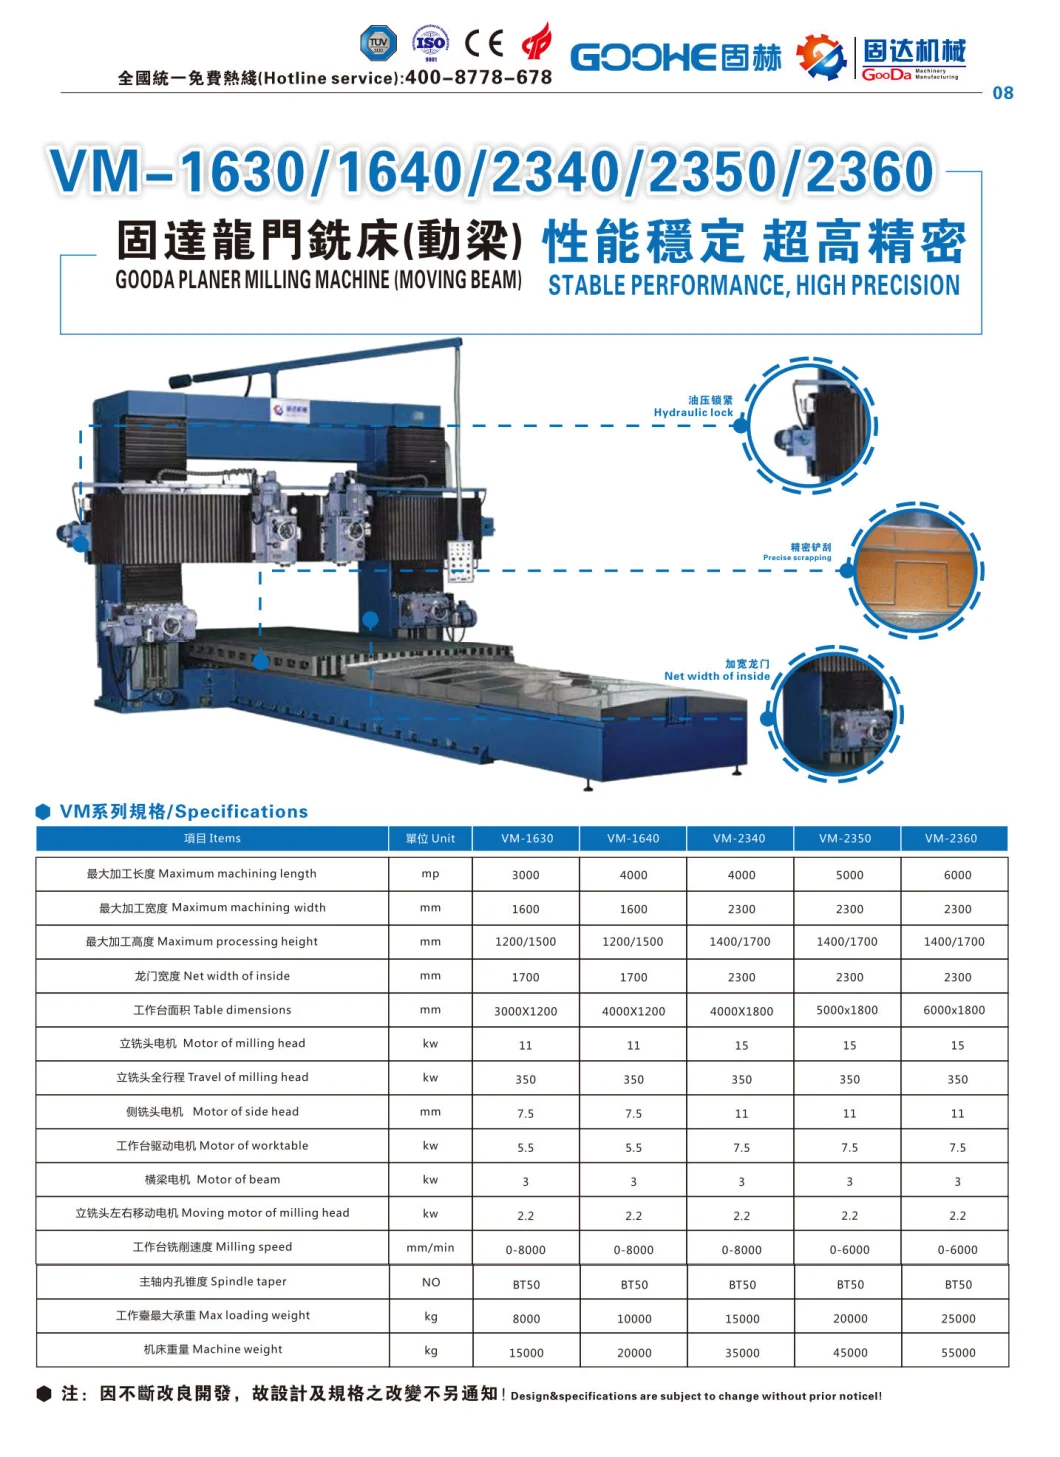 Vm-2340nc-CNC Precision Fixed Beam Gantry Milling Machine-Ultra-Wide Travel-High Rigidity Spindle-Gooda